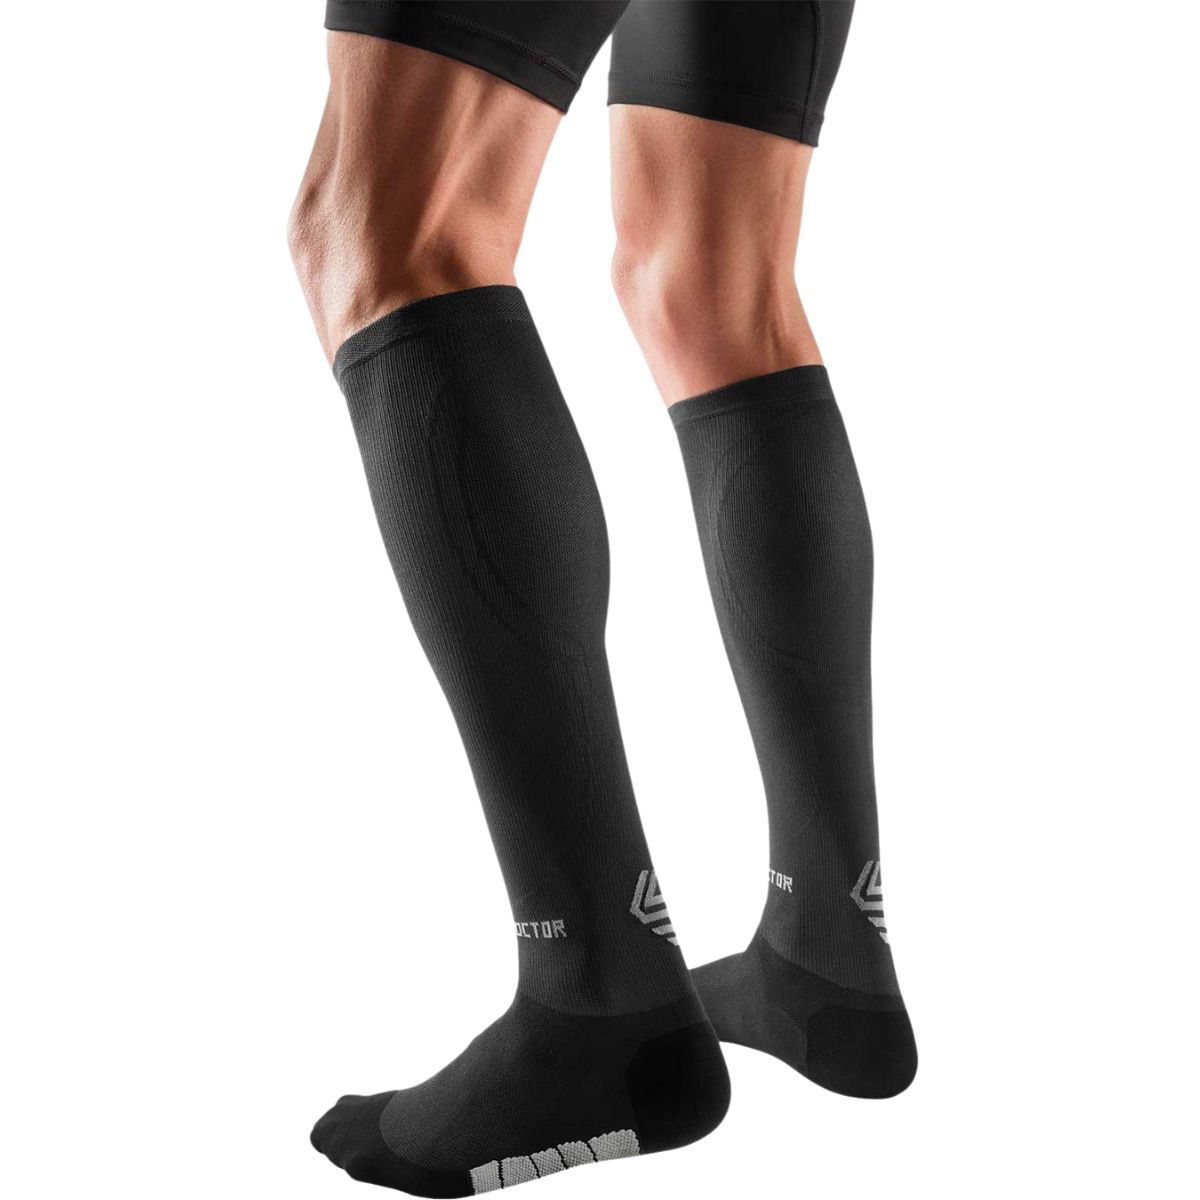 Copper Fit Pro Men’s Compression Moisture Wicking Seamless Comfort Crew Socks 